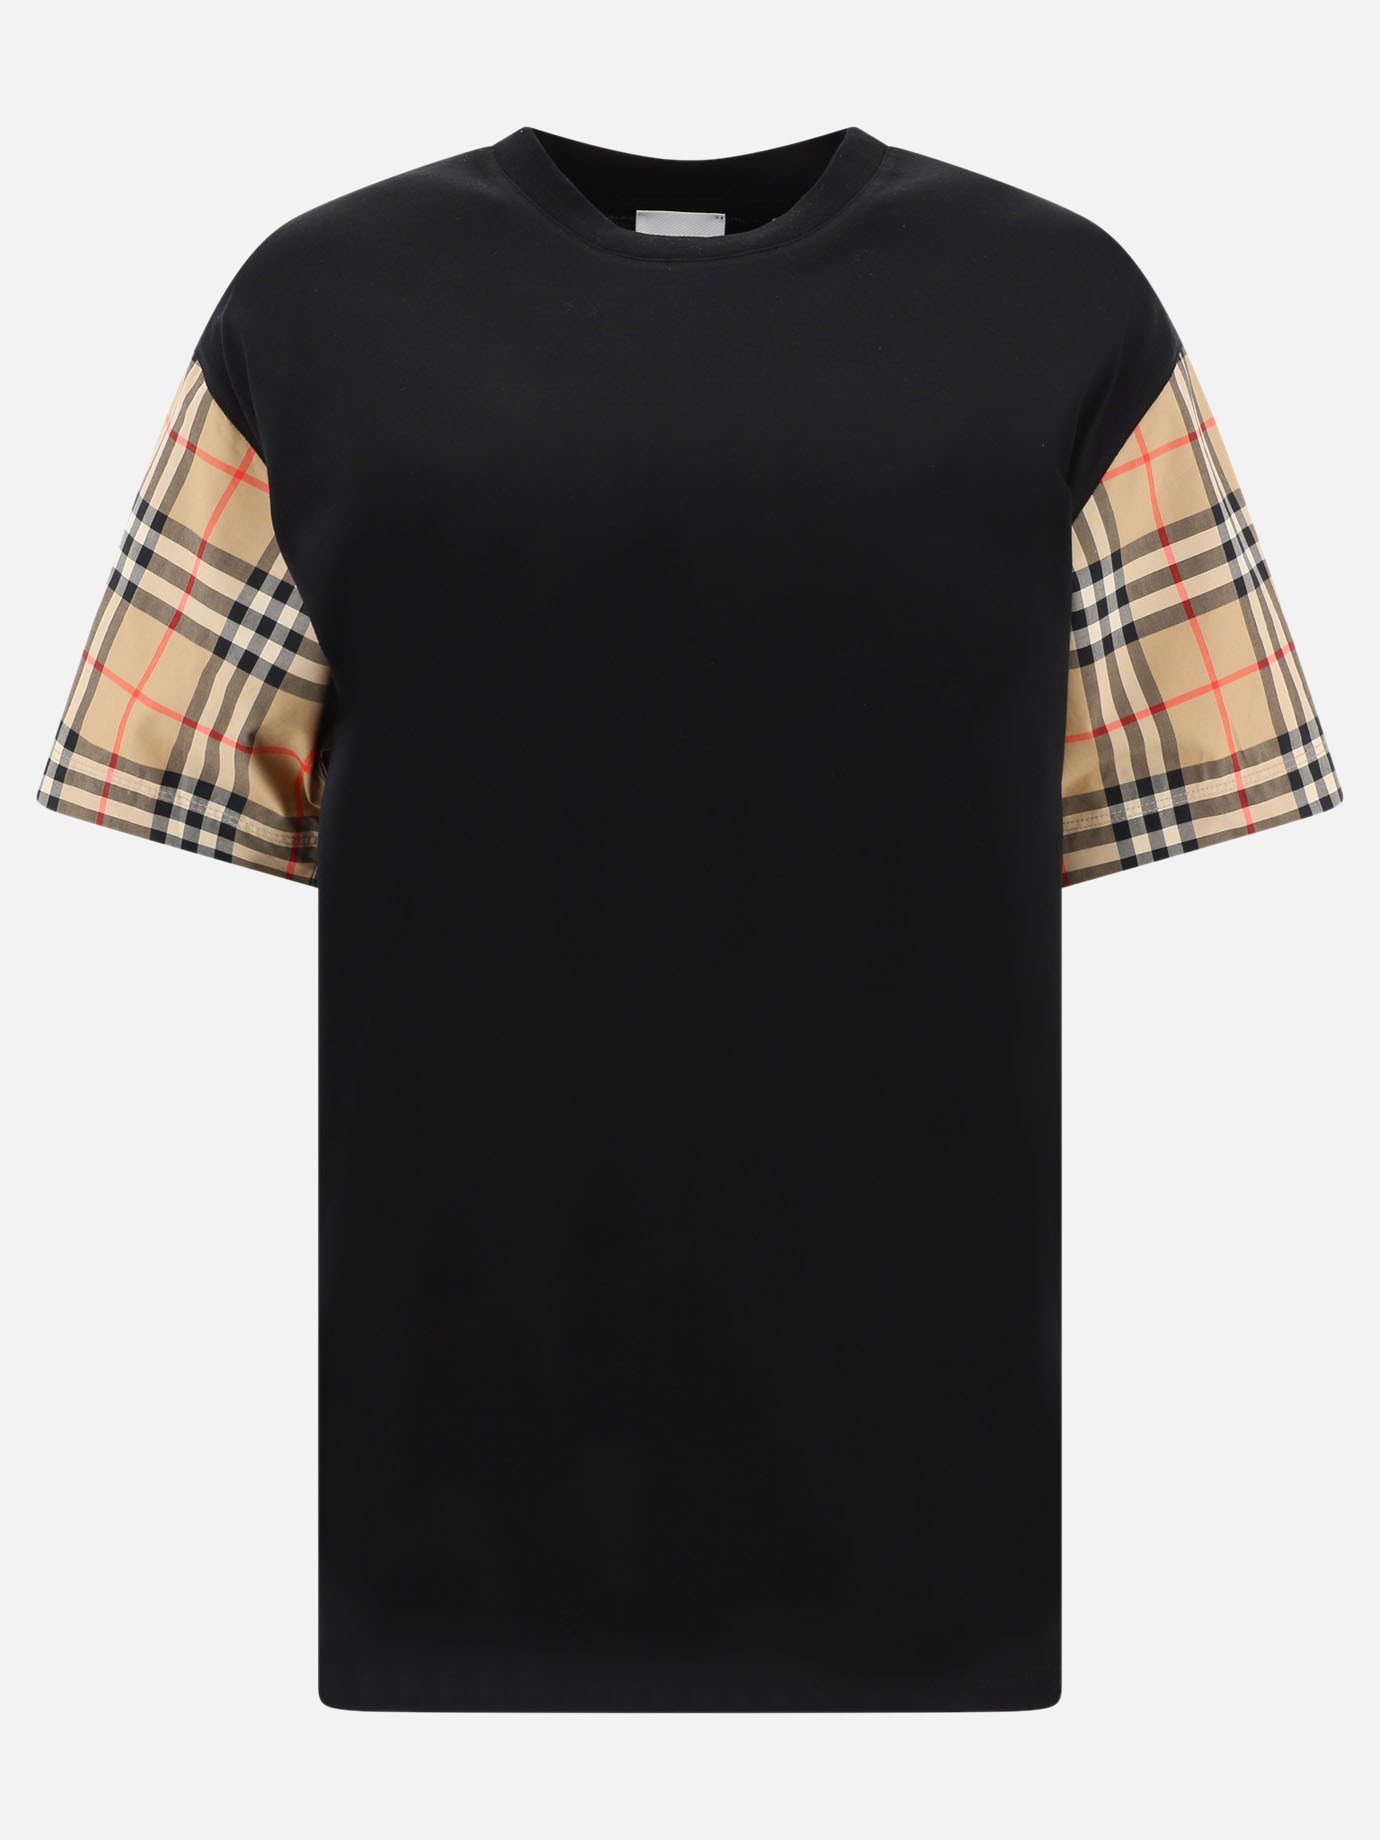  Carrick  t-shirtby Burberry - 4